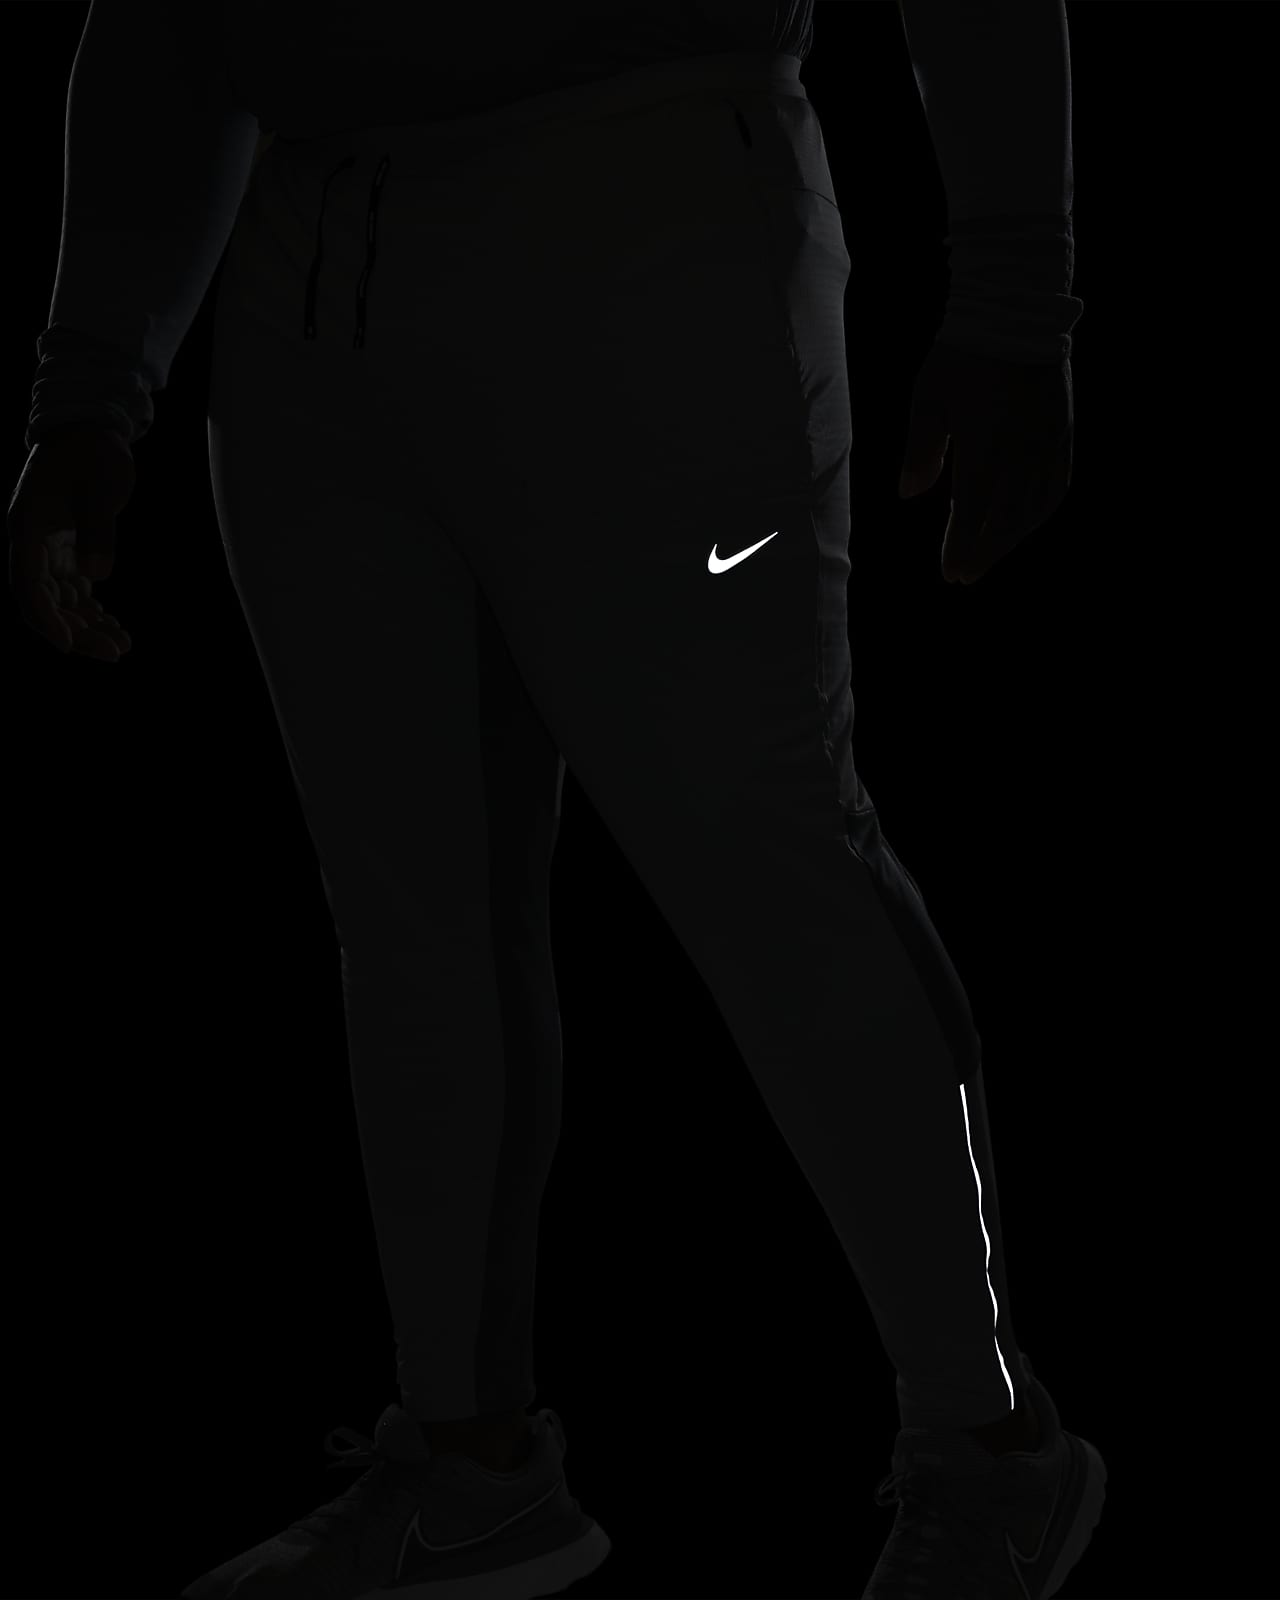 Pantalón Running Nike Dri-fit Phenom Elite Hombre